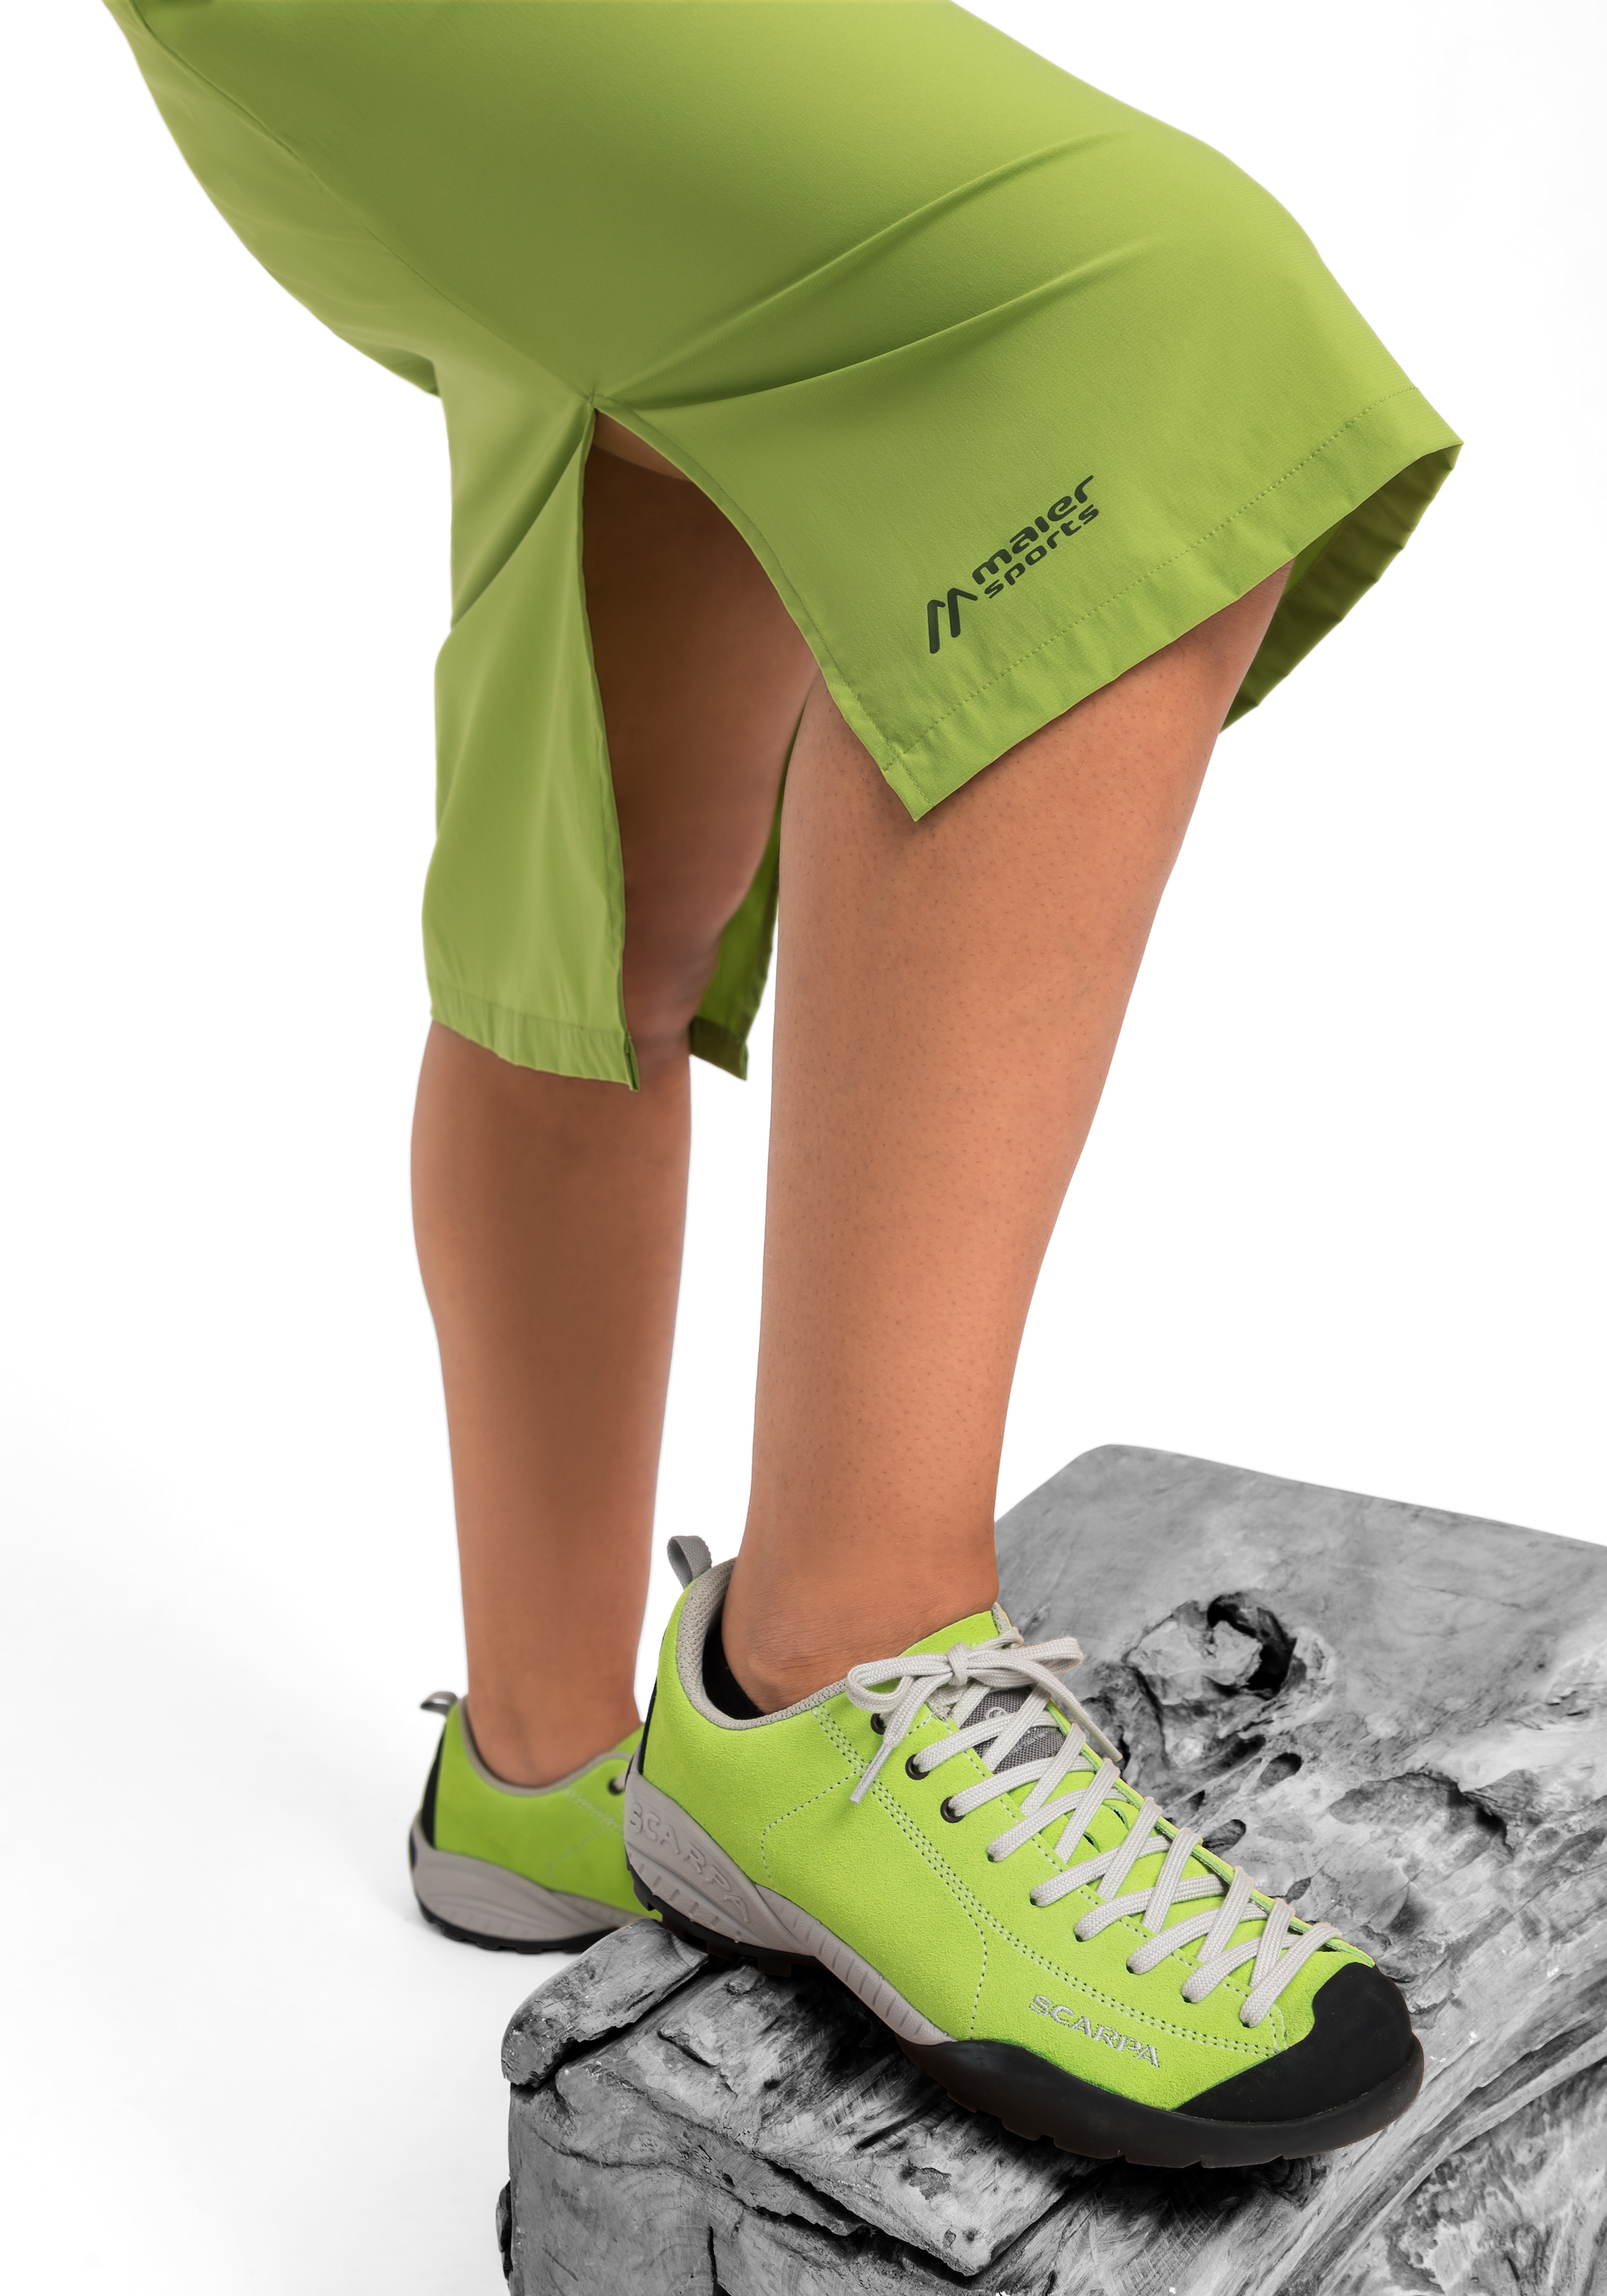 Entdecke Maier Sports Sommerrock »Fortunit Skirt« auf